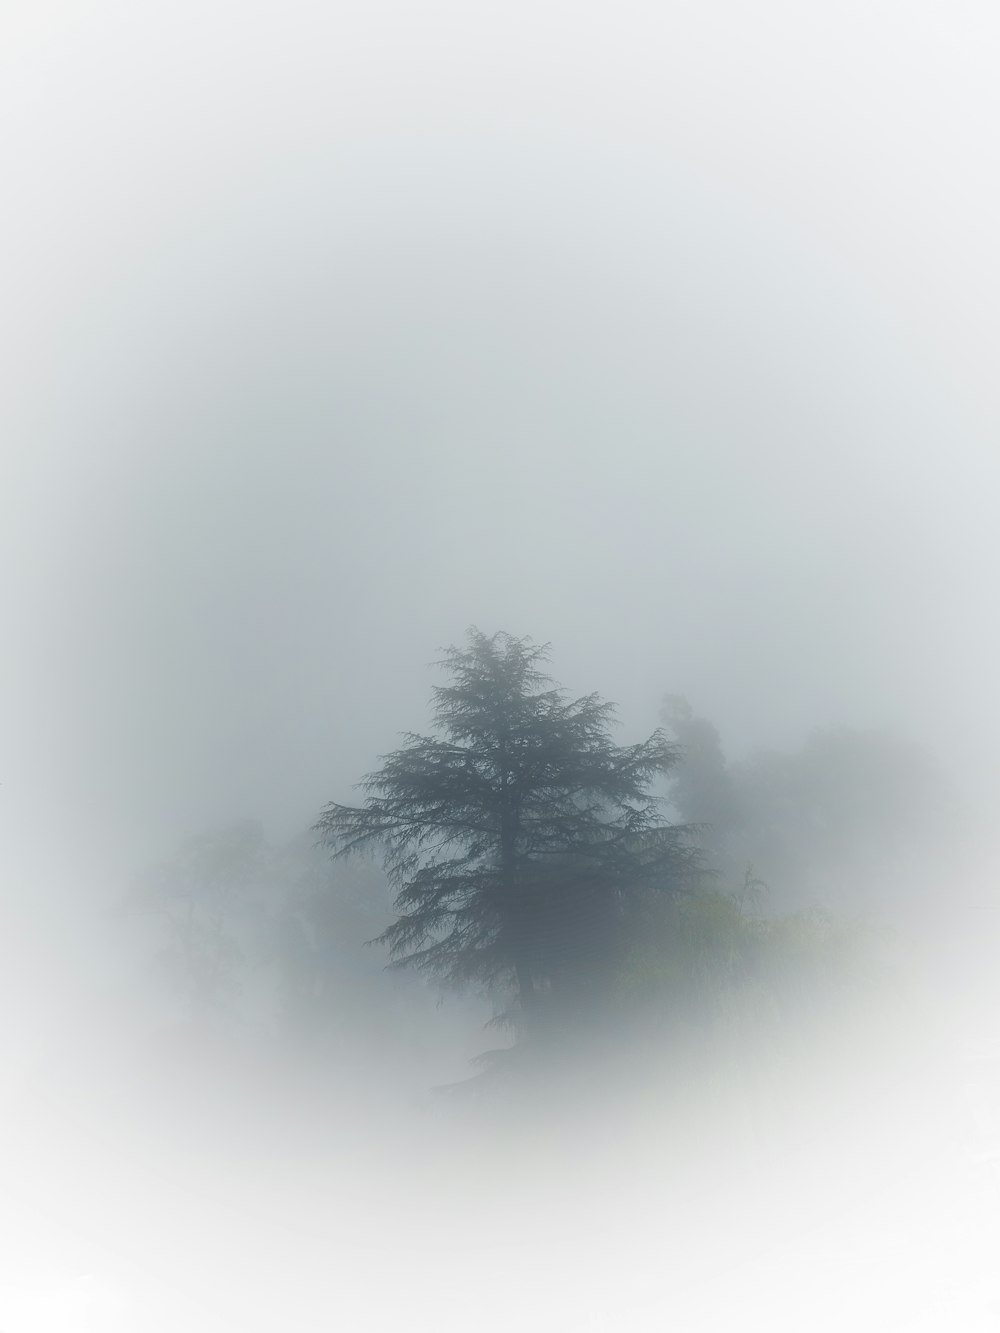 a lone tree in a foggy field